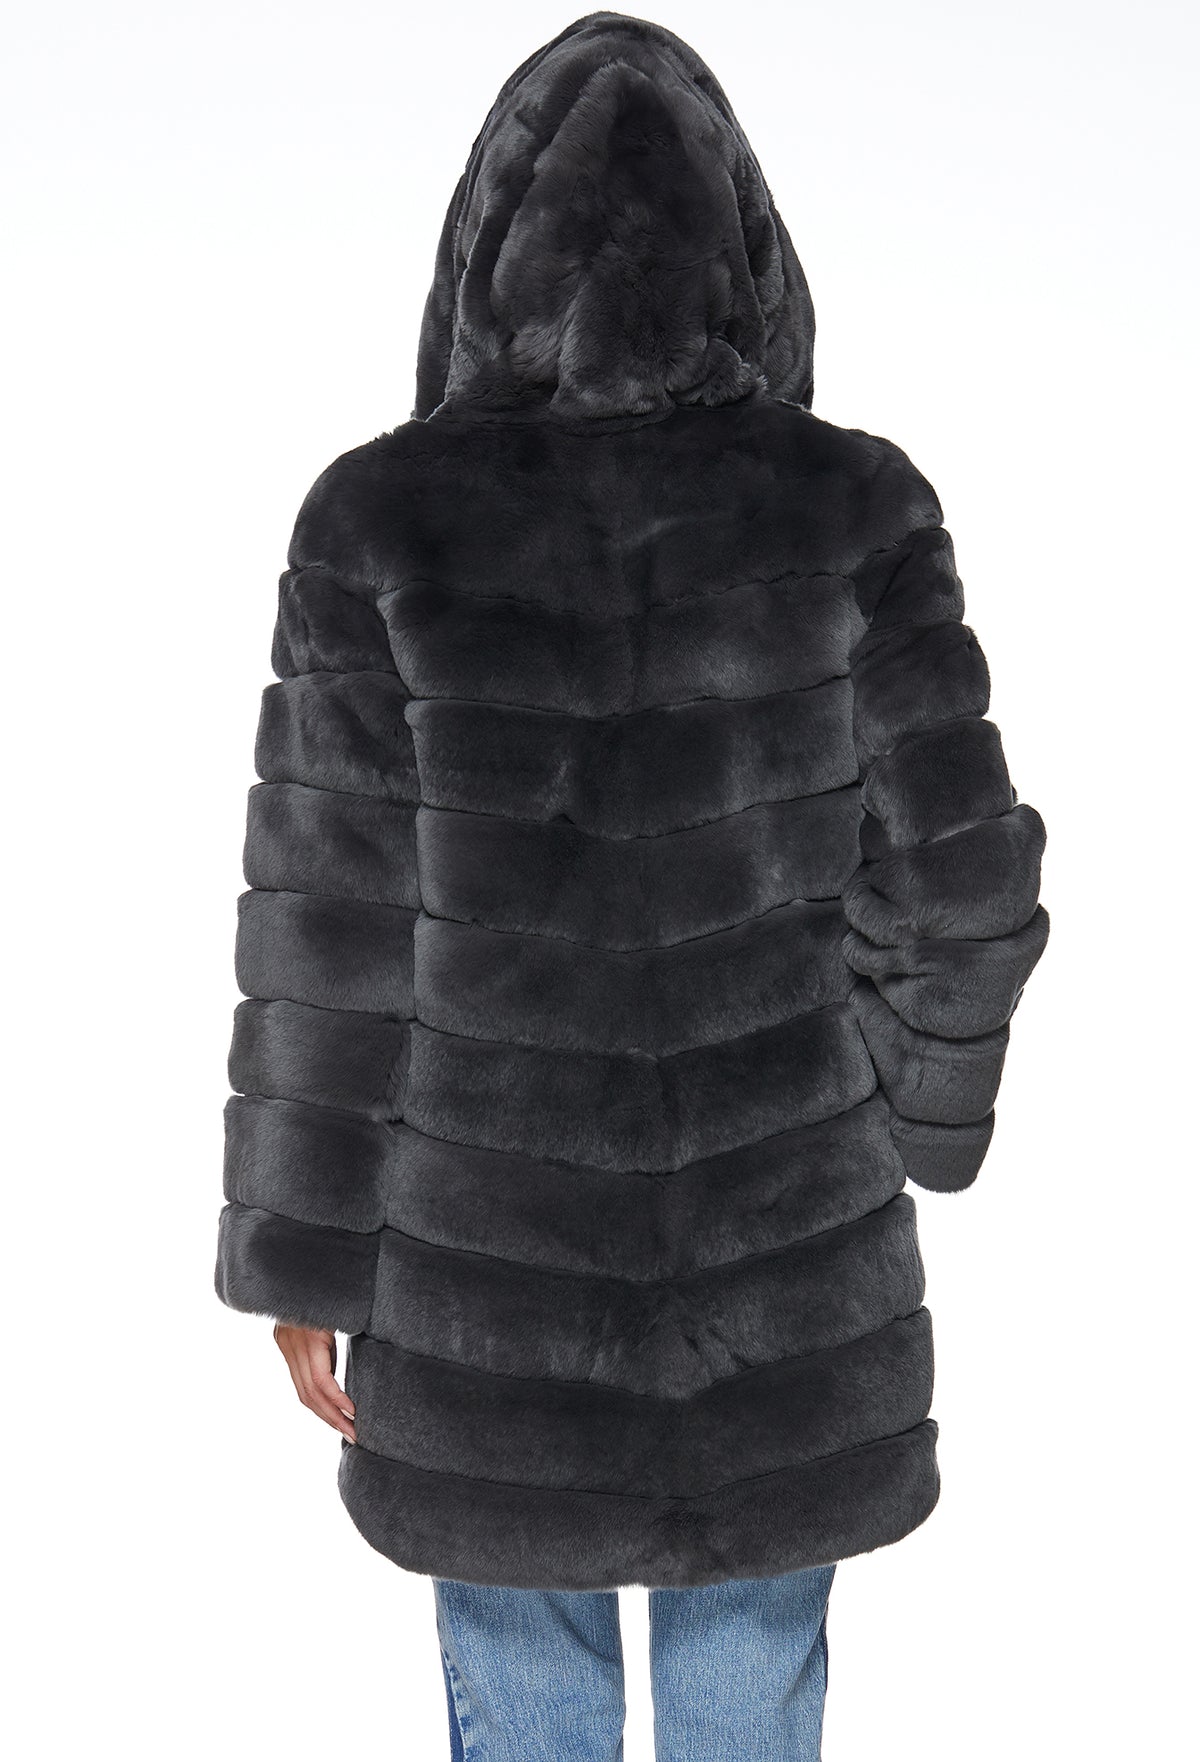 SNOW DAY COAT - Lysa Lash Furs